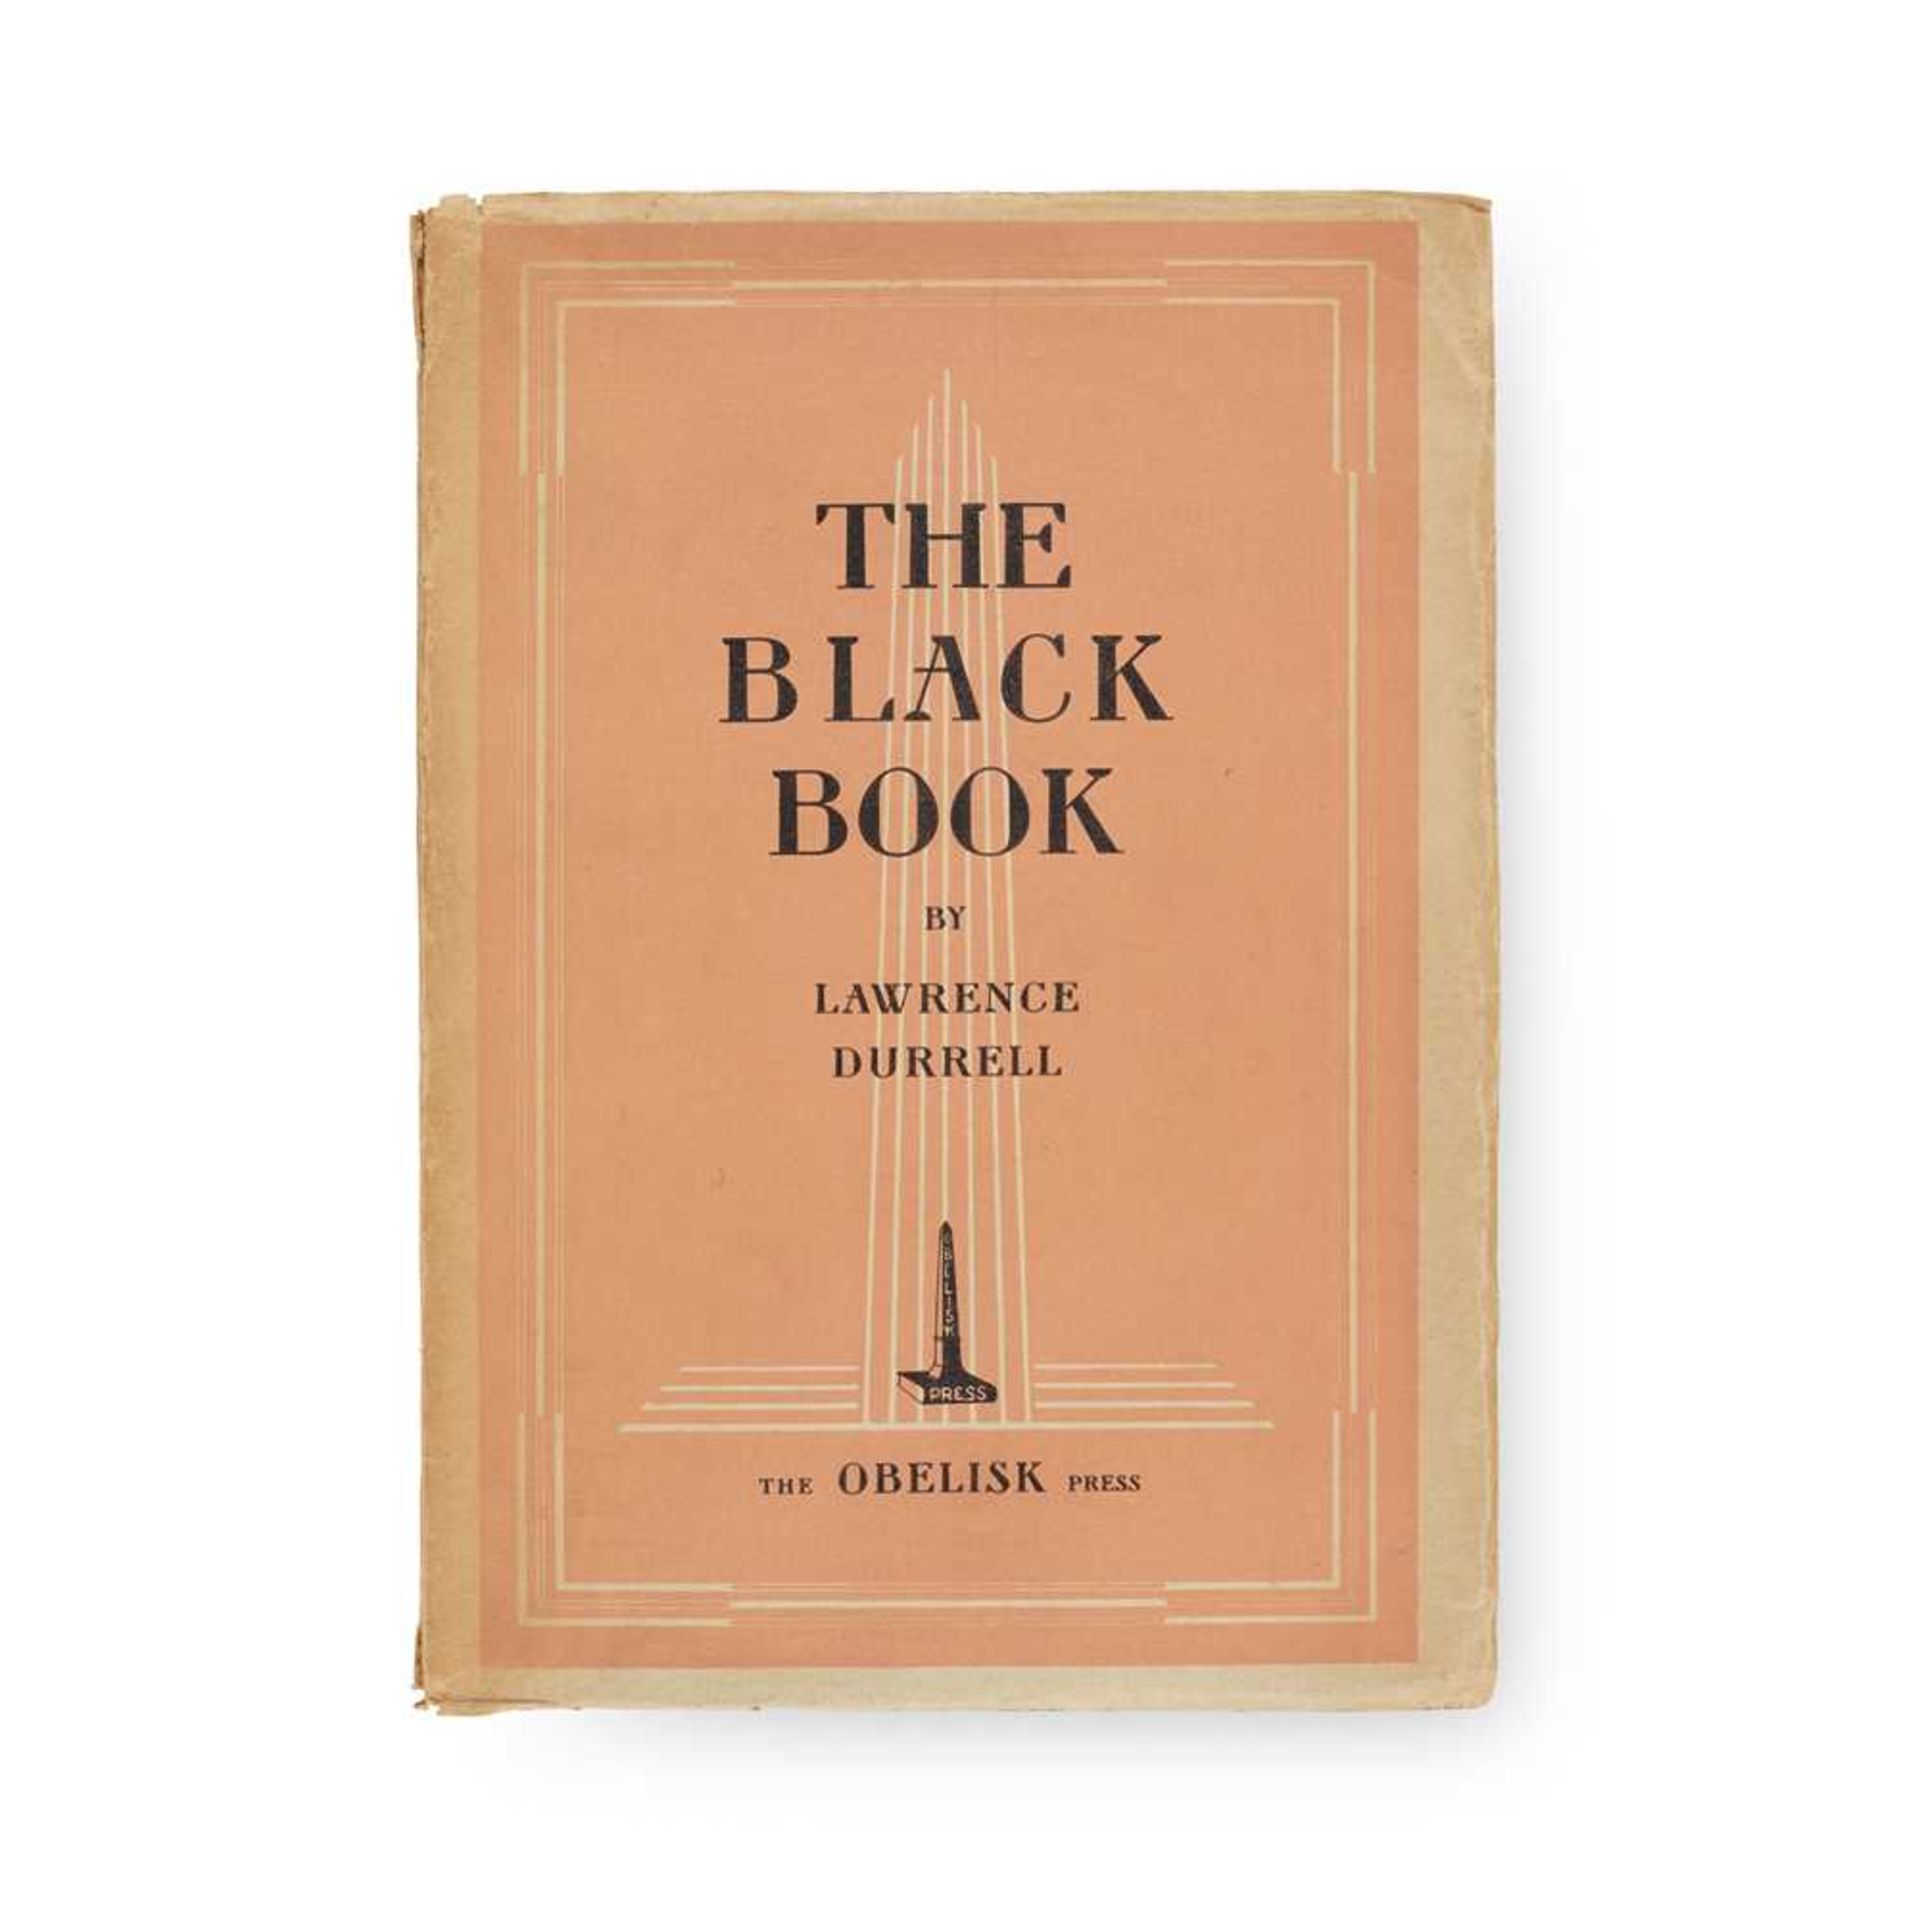 Durrell, Lawrence The Black Book Paris: The Obelisk Press, June 1938. First edition, 8vo, original